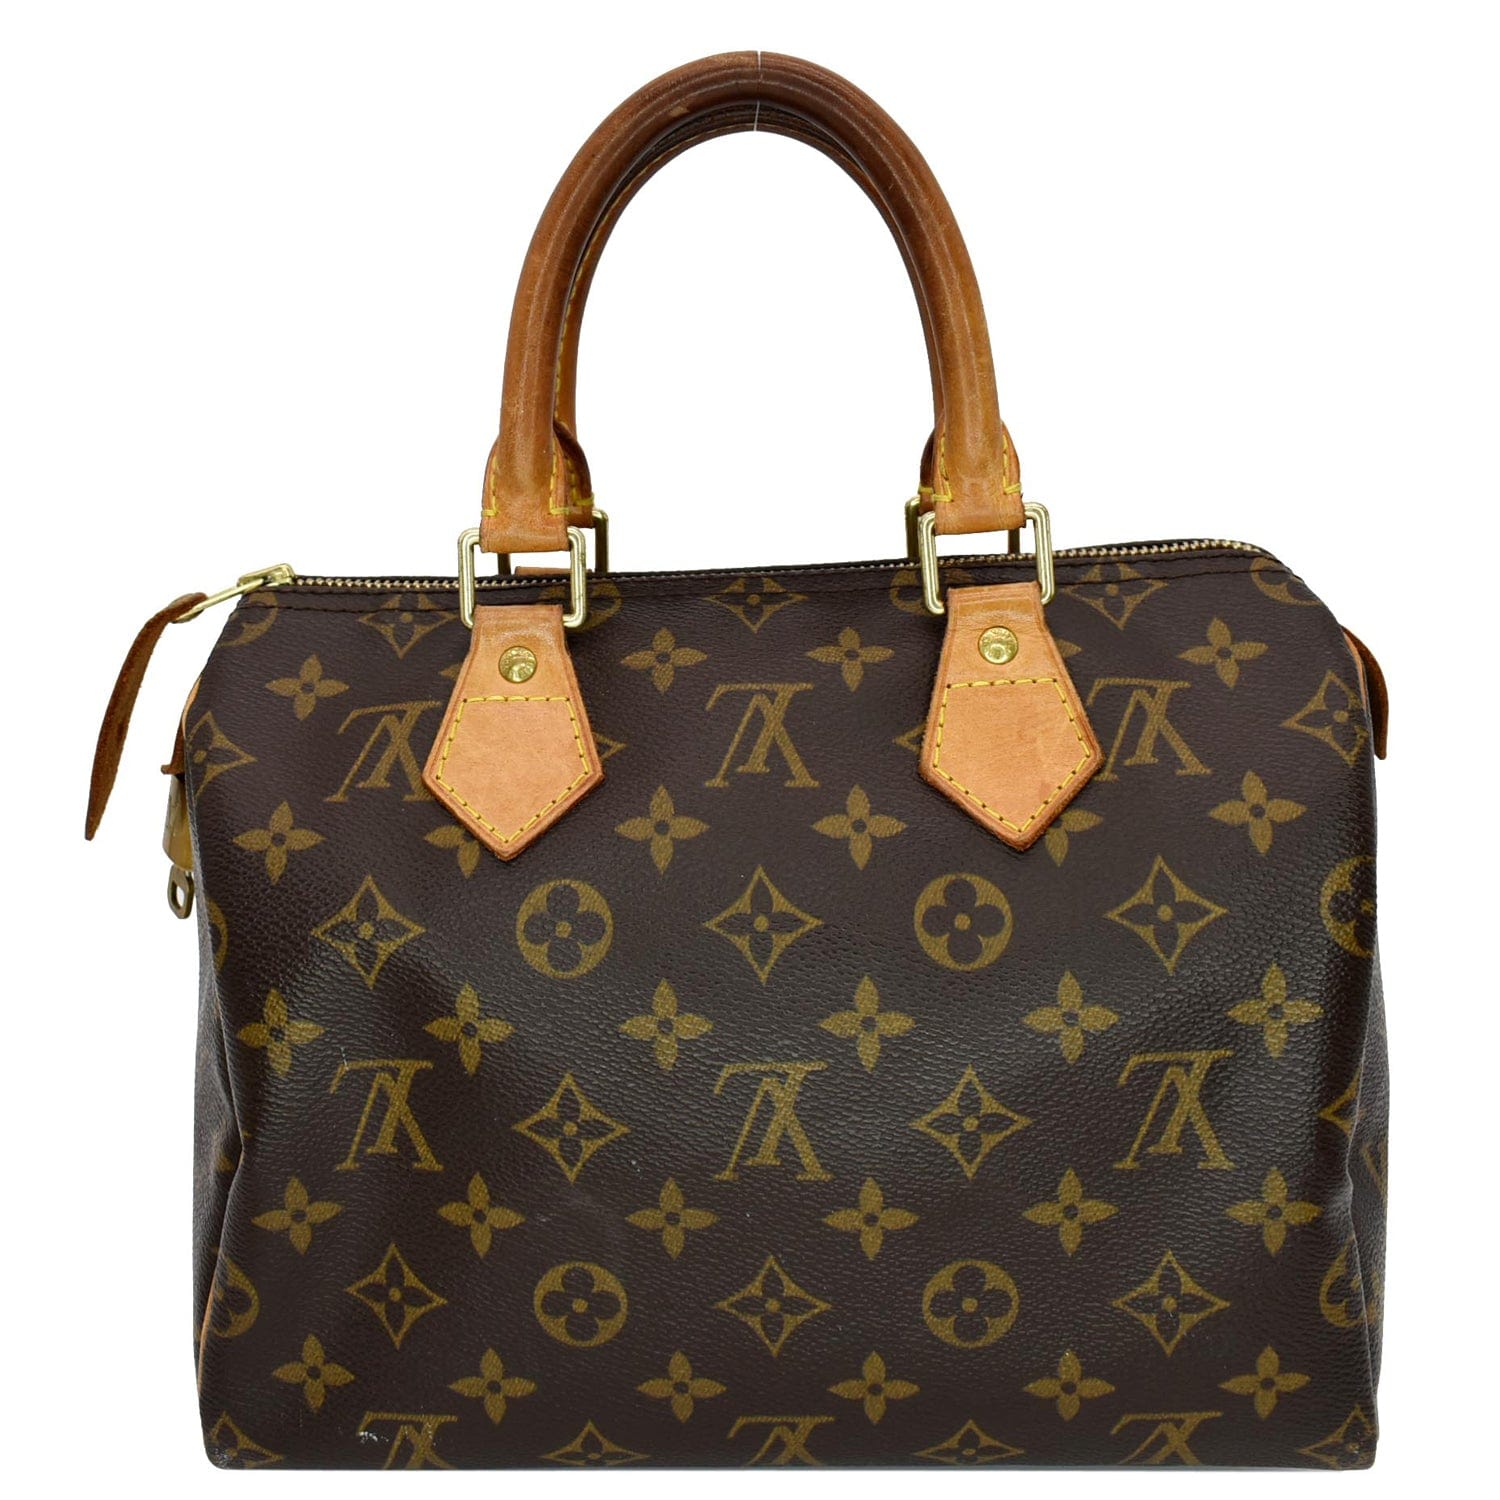 LOUIS VUITTON satchel bag in brown monogram canvas - VALOIS